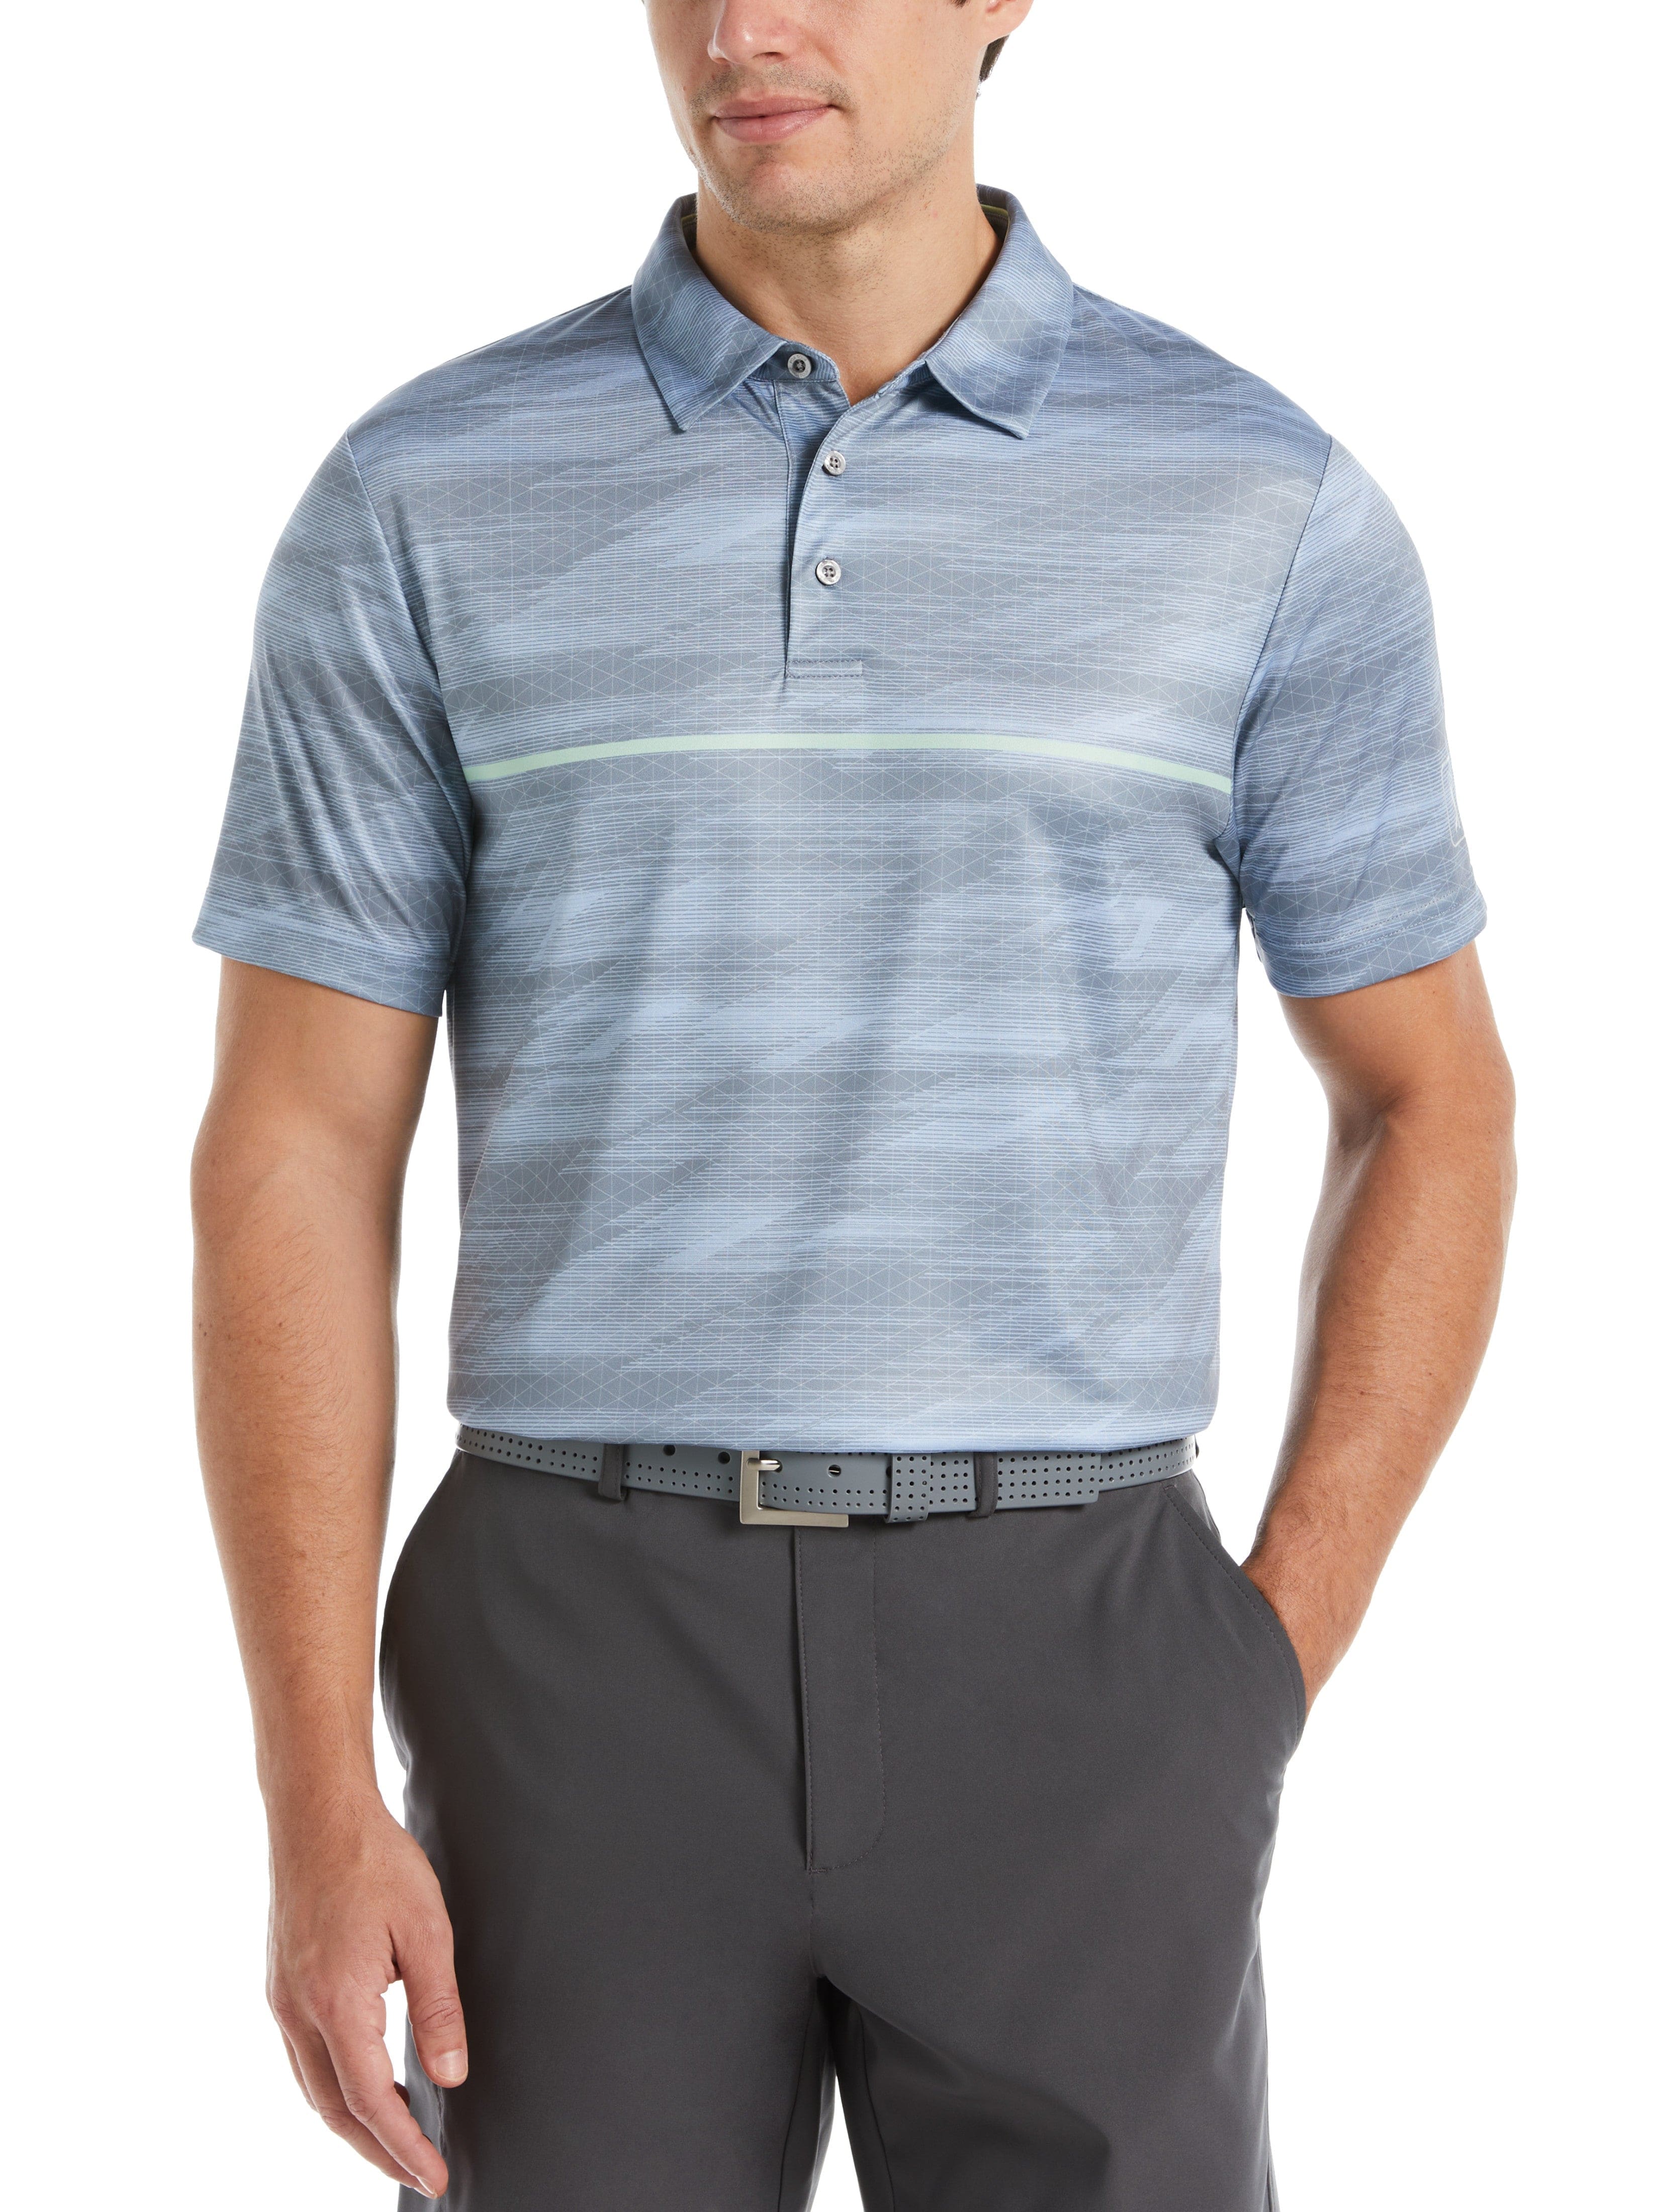 PGA TOUR Apparel Mens Digitized Chest Stripe Print Golf Polo Shirt, Size Large, Tradewinds Gray, 100% Polyester | Golf Apparel Shop